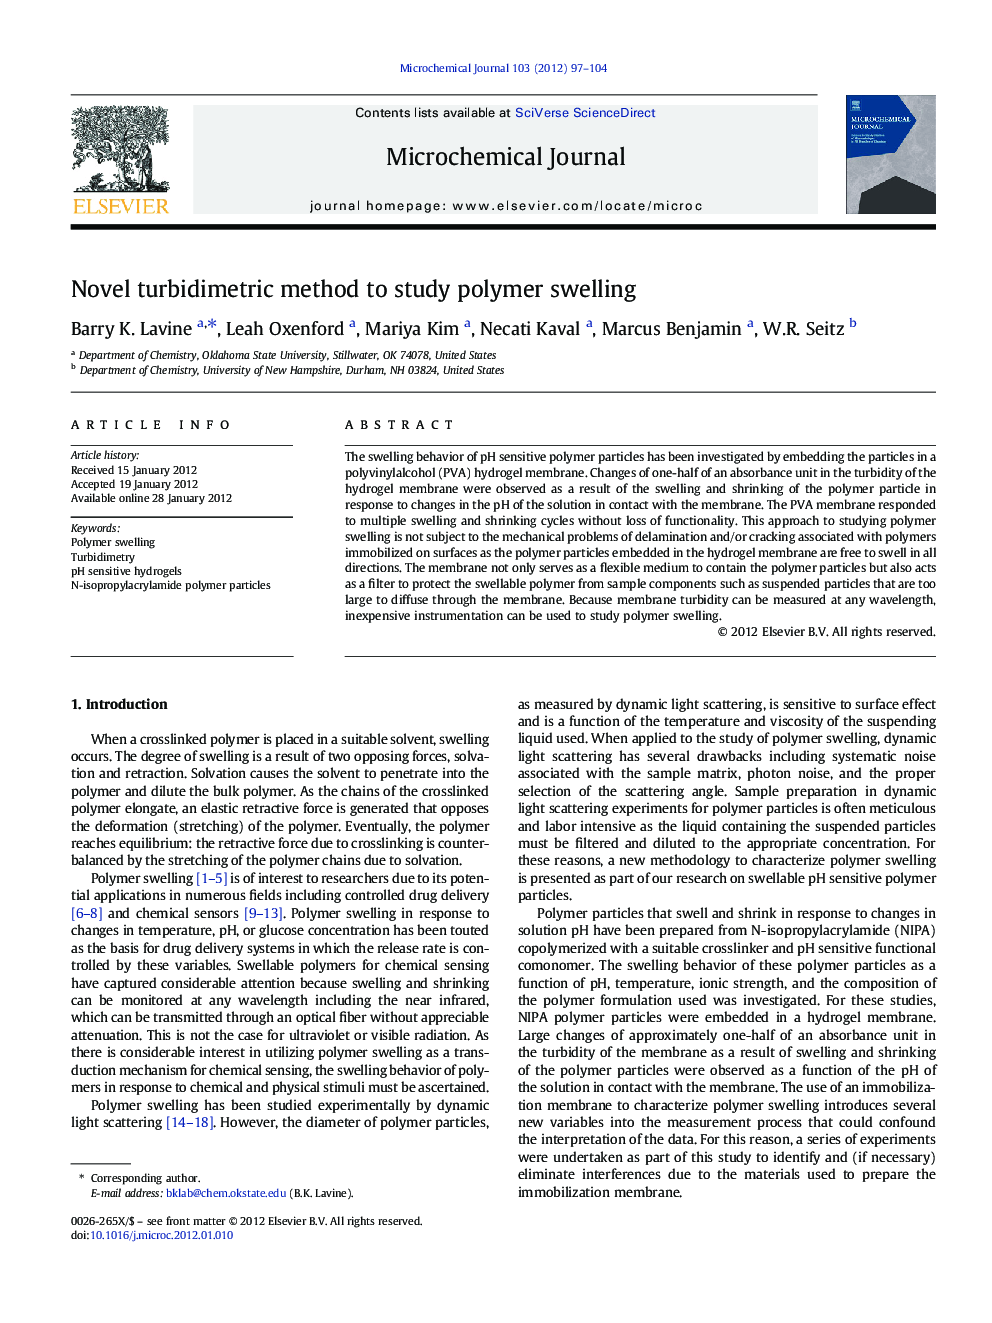 Novel turbidimetric method to study polymer swelling